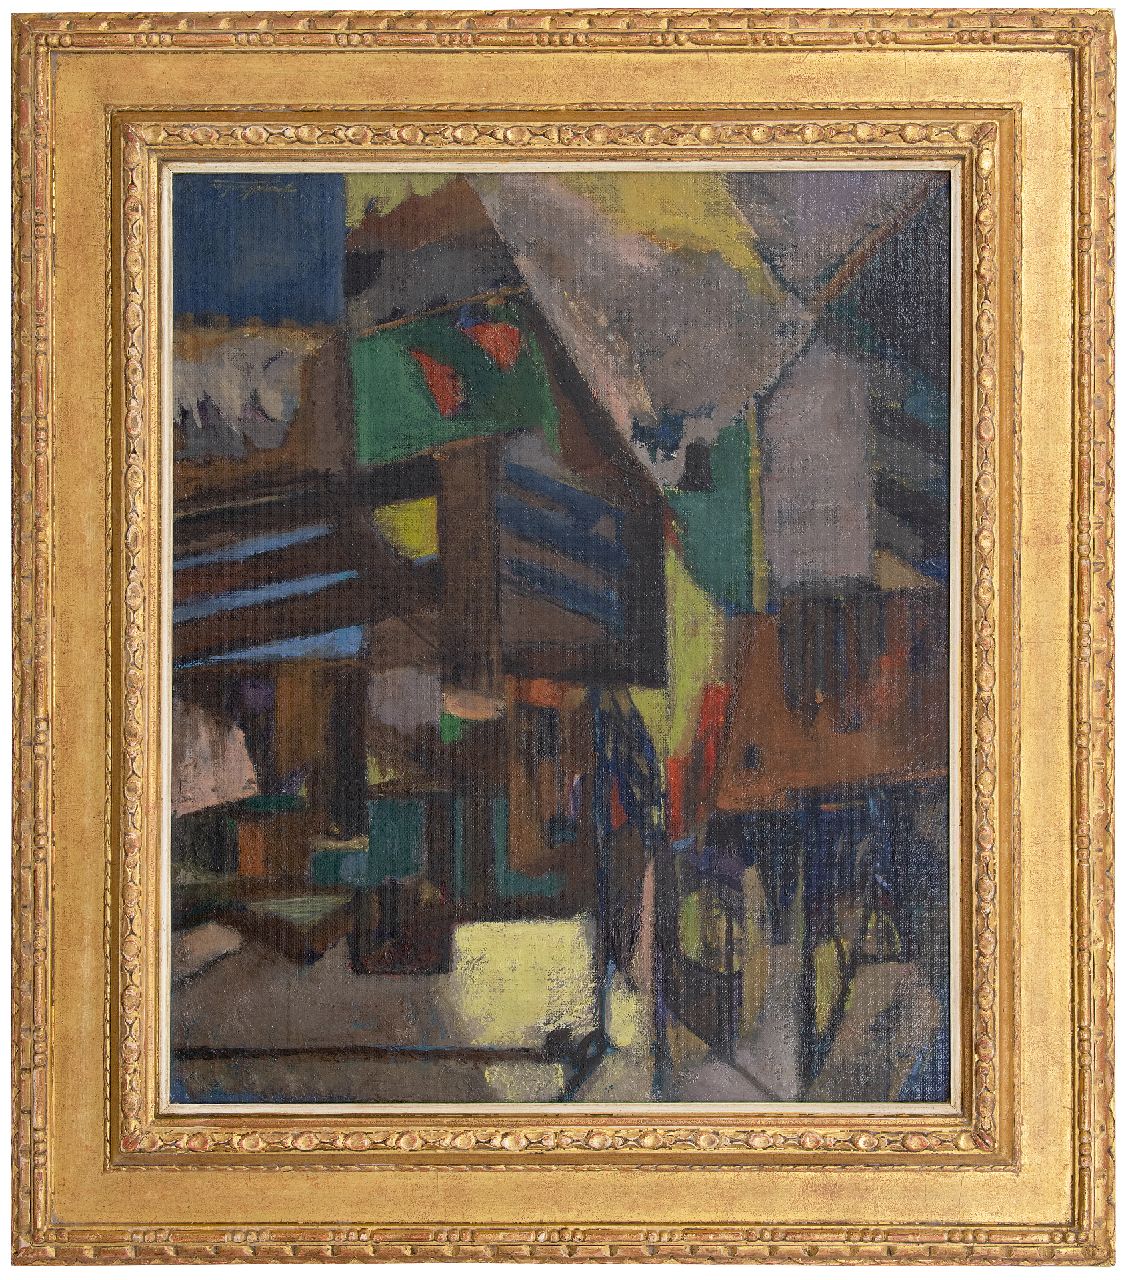 Koelen G.H.  | Gerhardus Hendrikus 'Gerard' Koelen | Paintings offered for sale | Rooftop view, oil on board 70.3 x 59.2 cm, signed l.r.